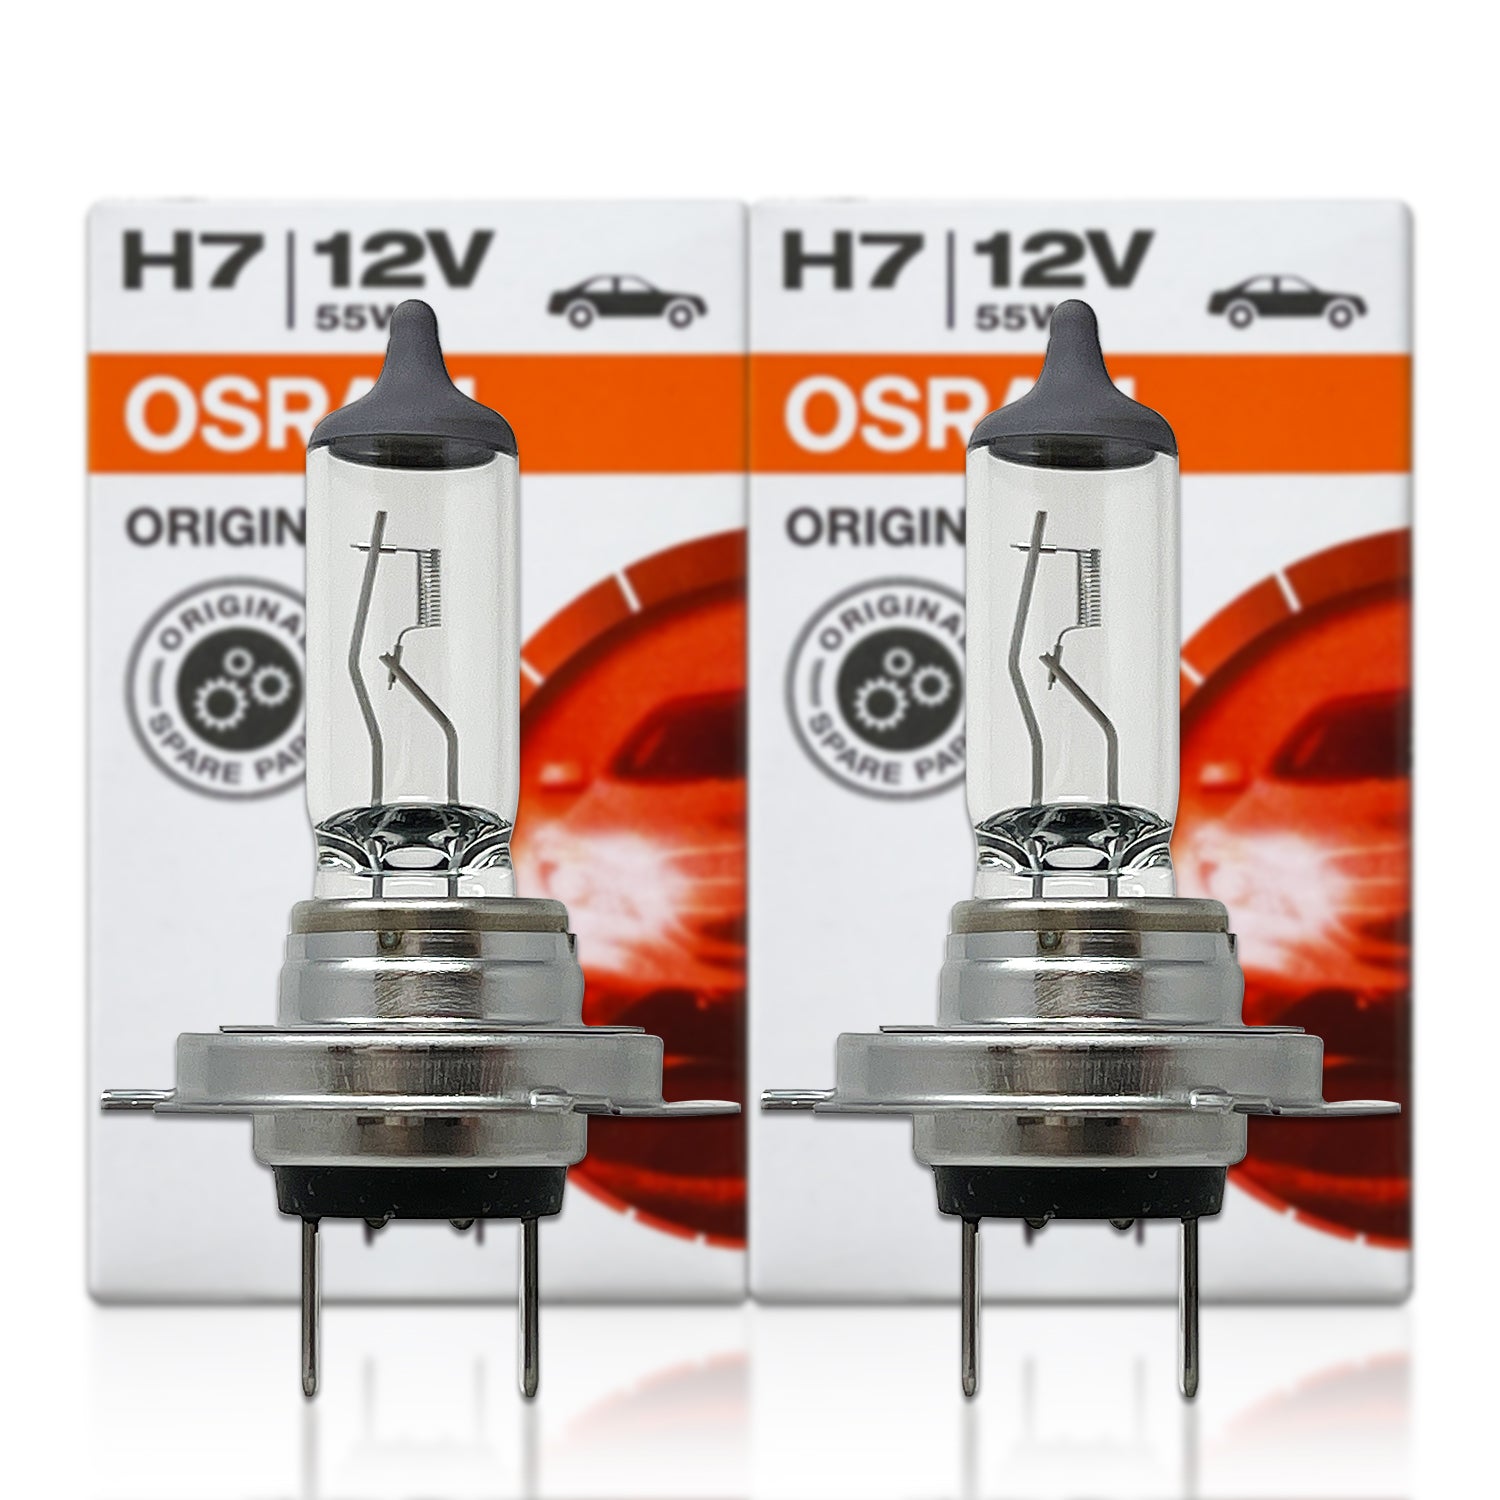 H7 Osram Night Breaker Laser Halogen Headlight Bulb 64210NL (Pack